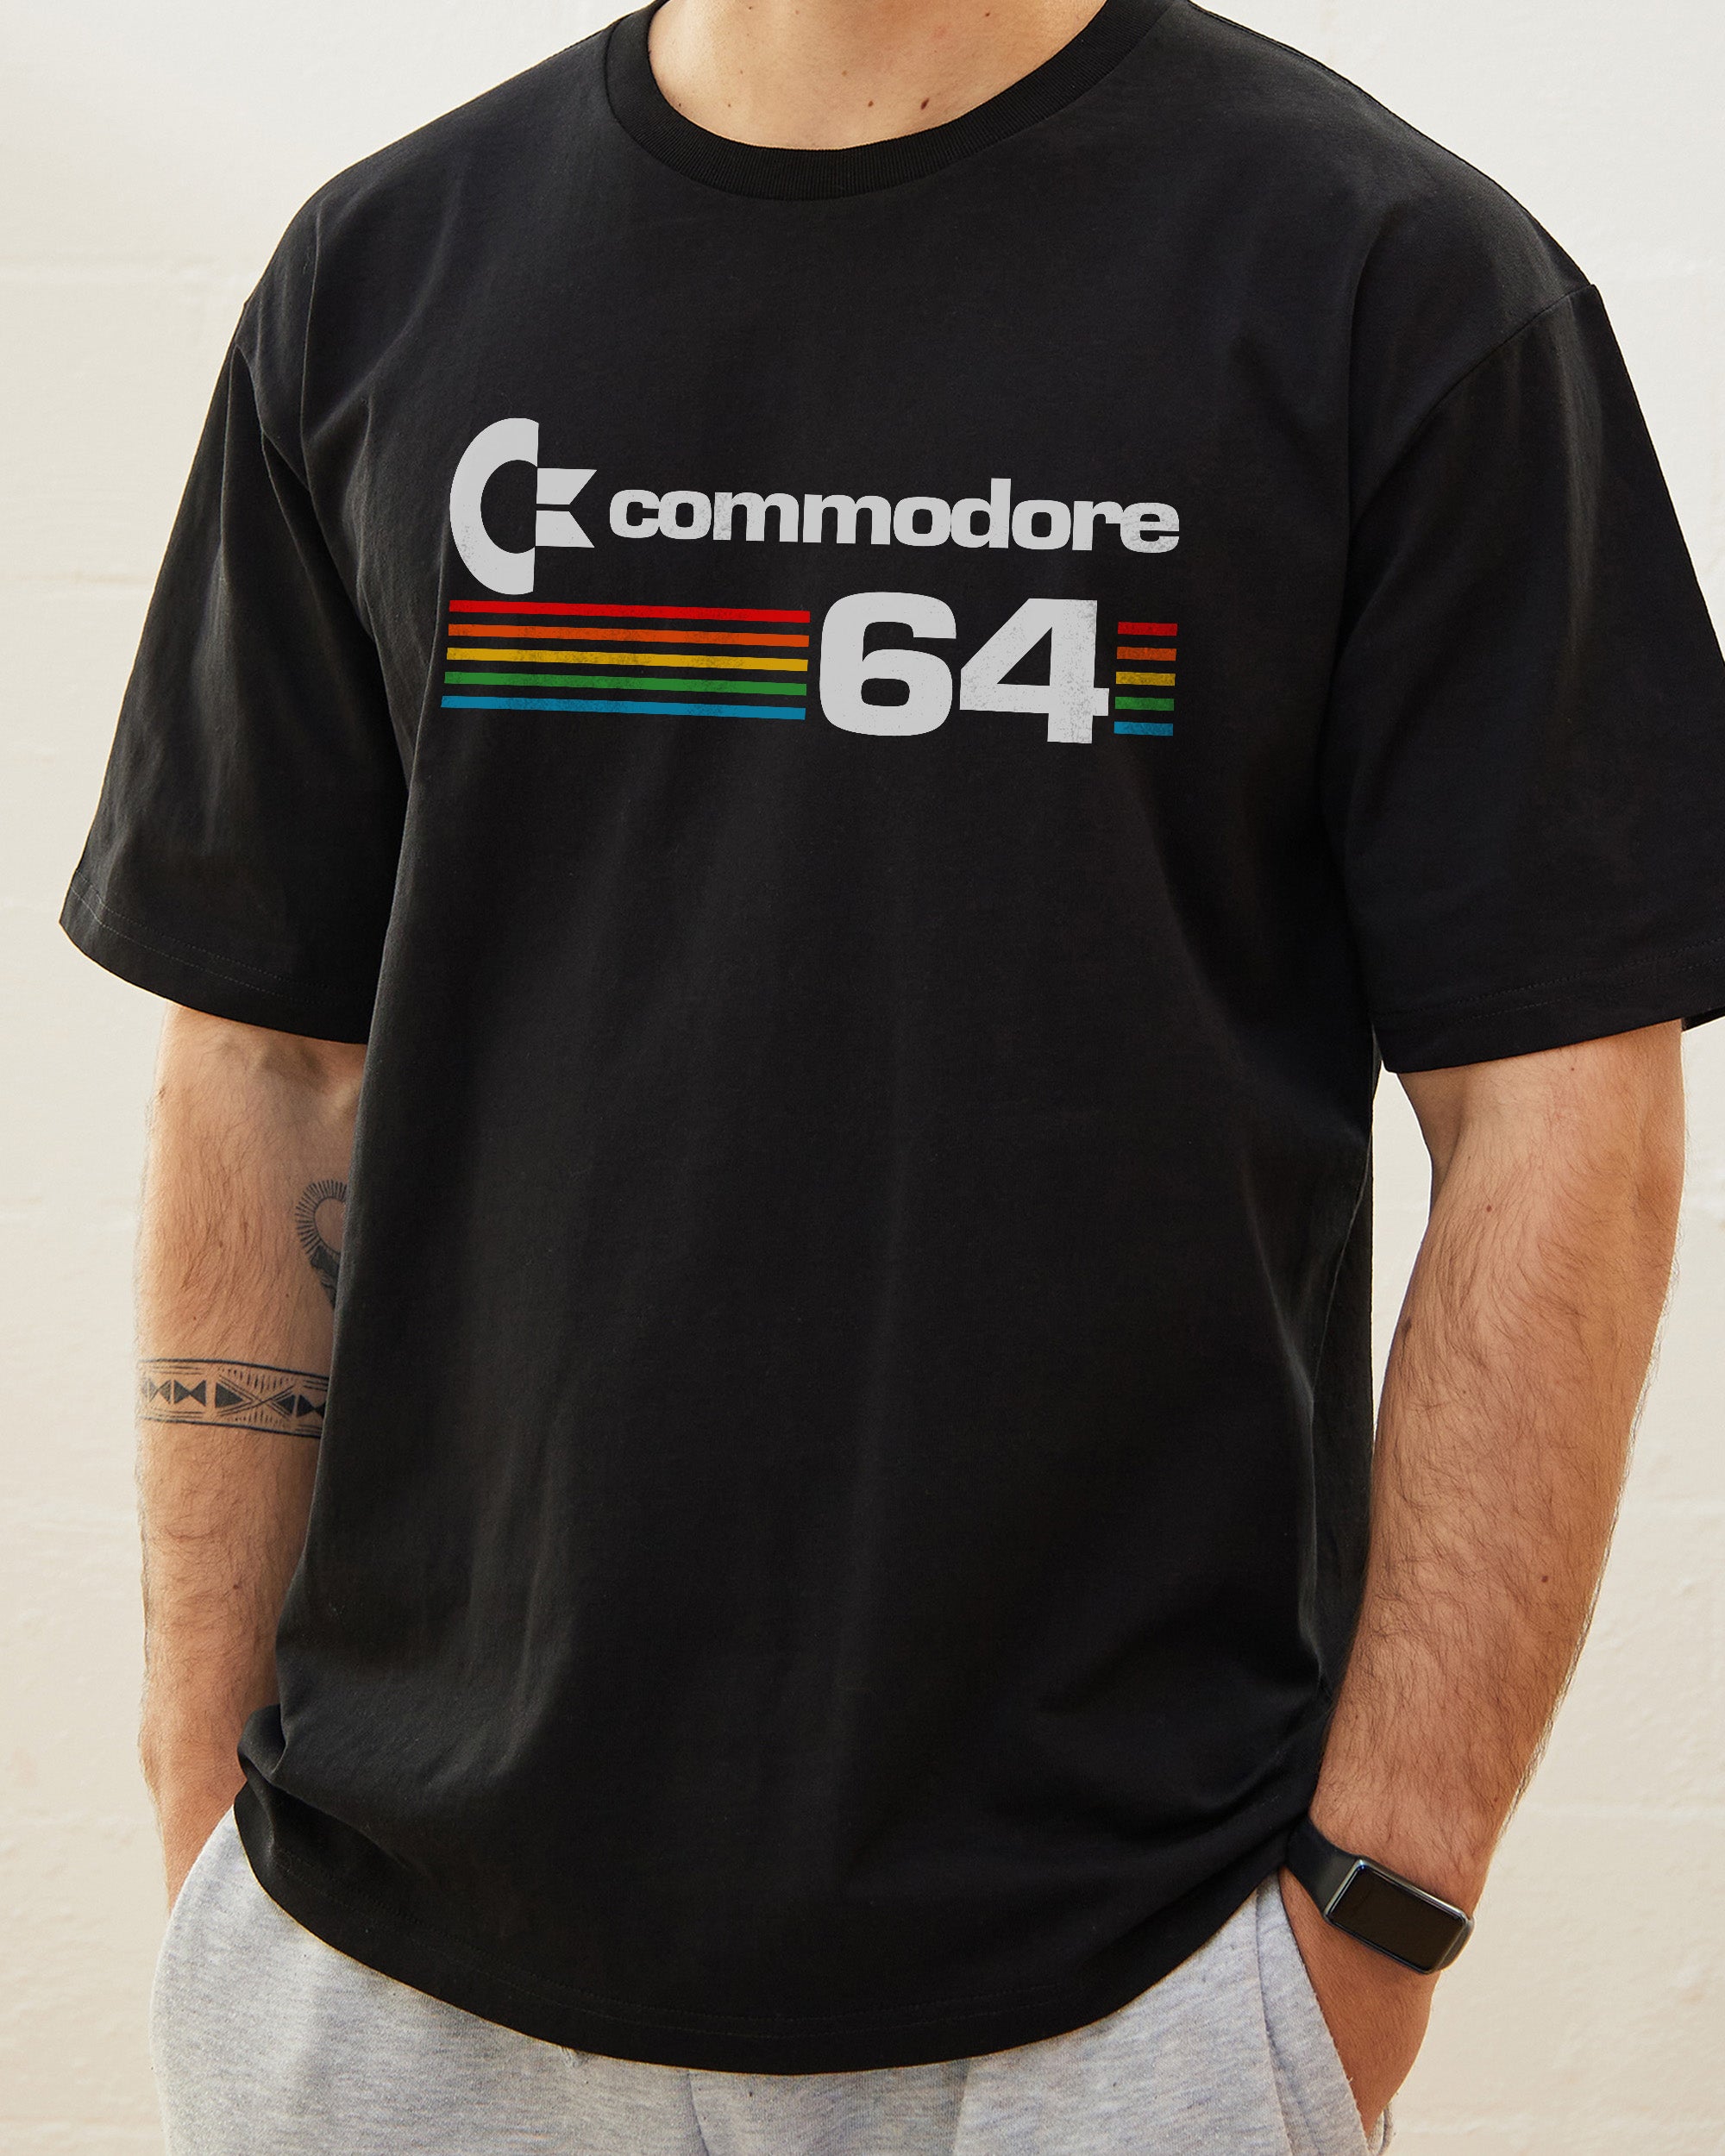 Commodore 64 T-Shirt Australia Online